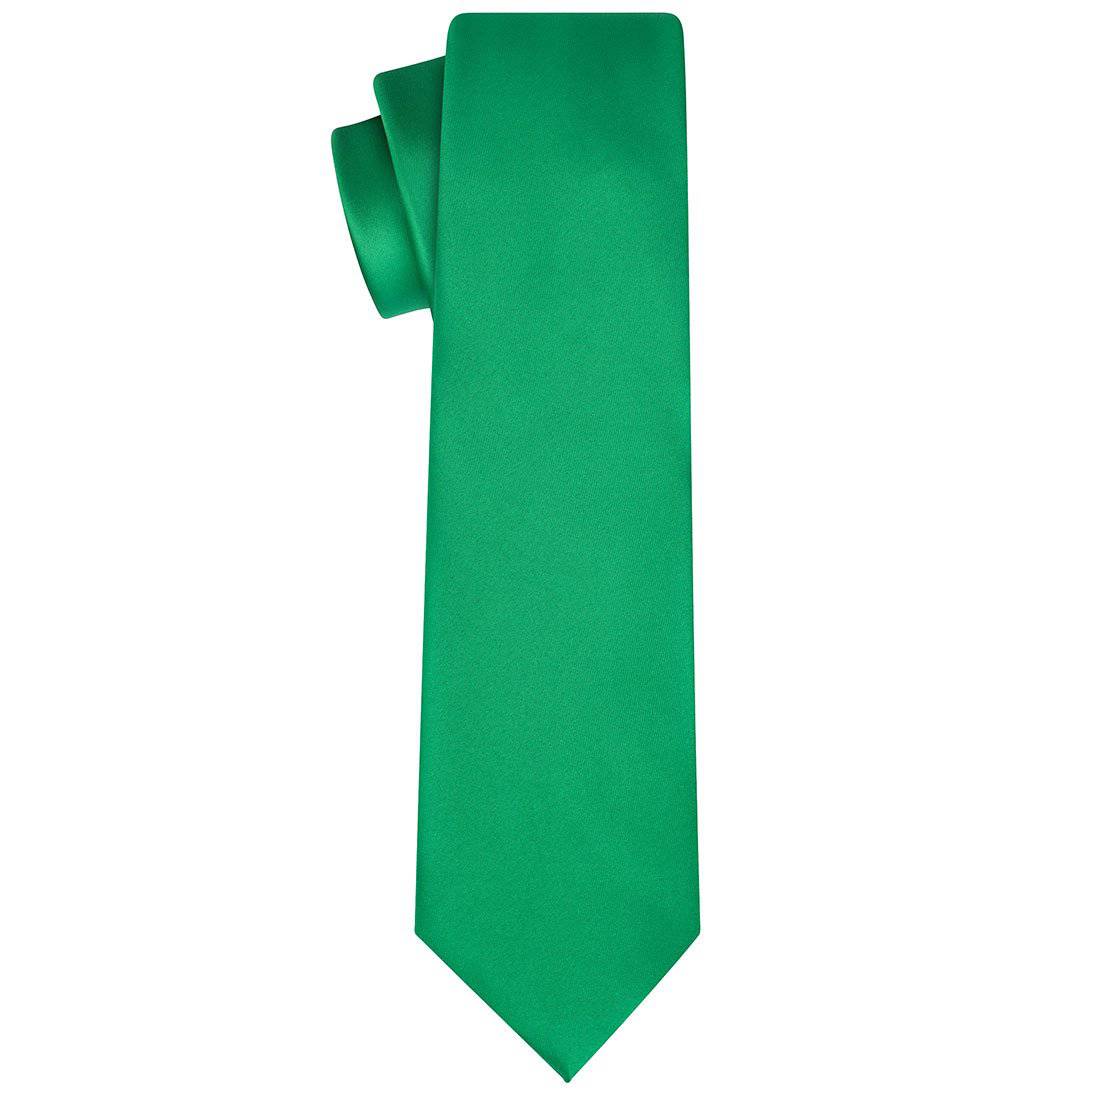 Emerald Green Satin Tie - Tie, bowtie, pocket square  | Kissties